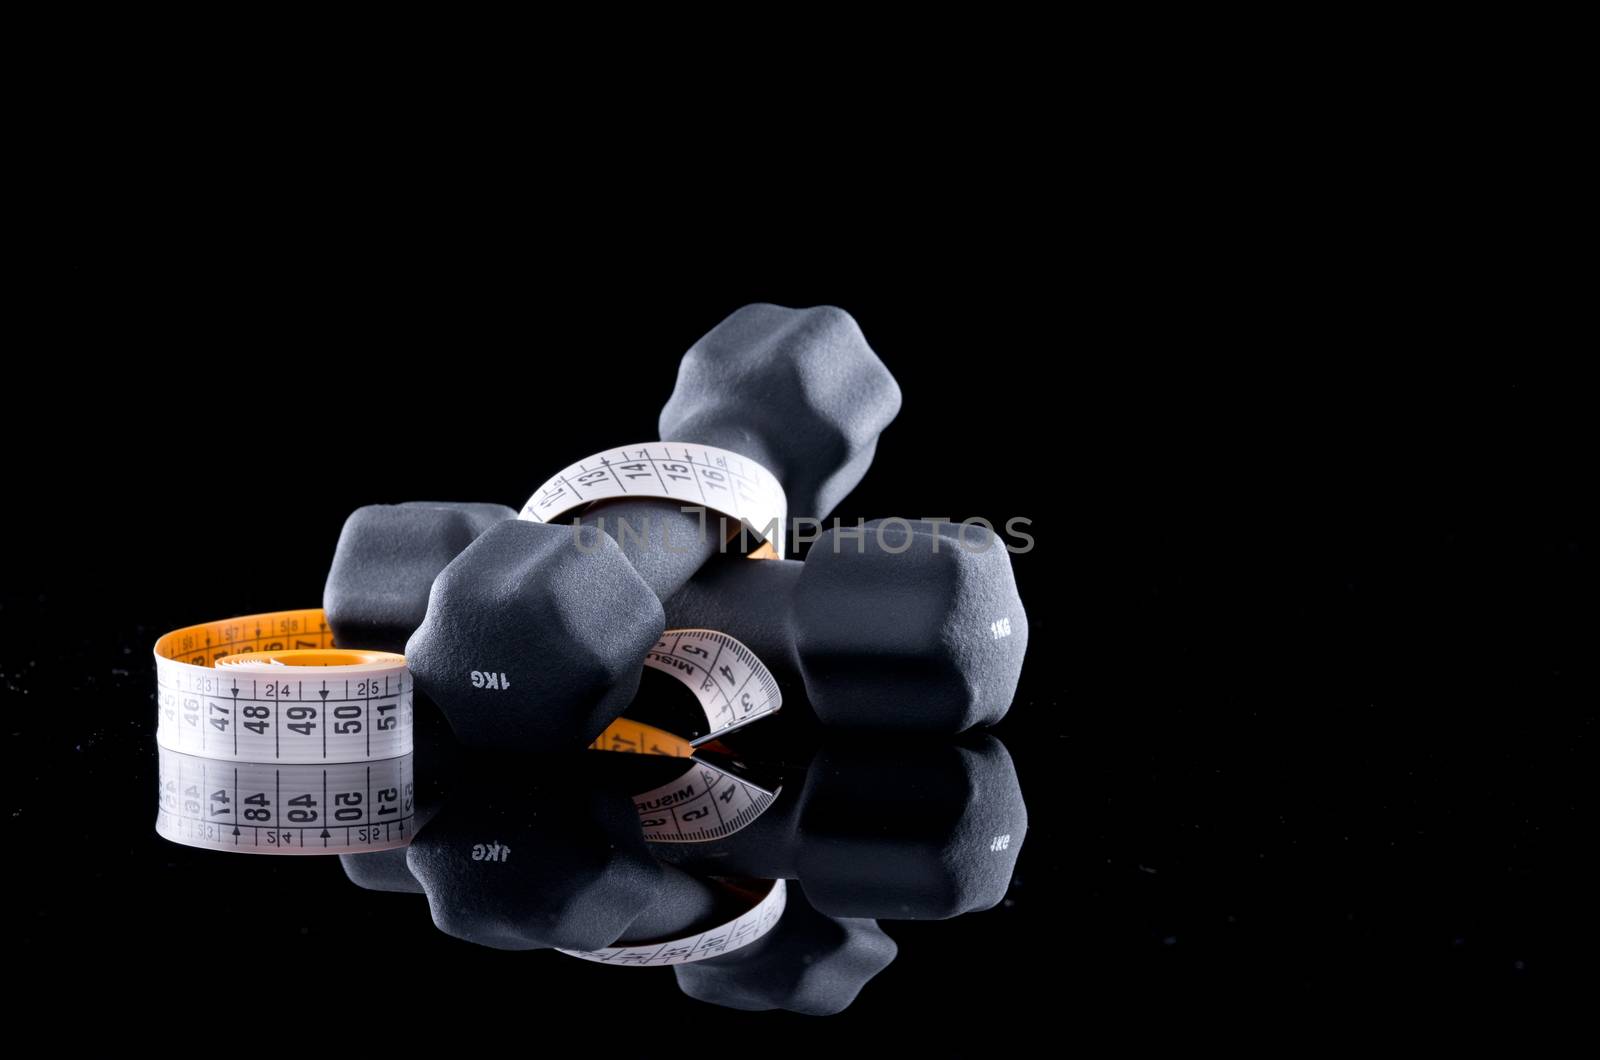 One kilogram dumbbells and tape measure on black background.